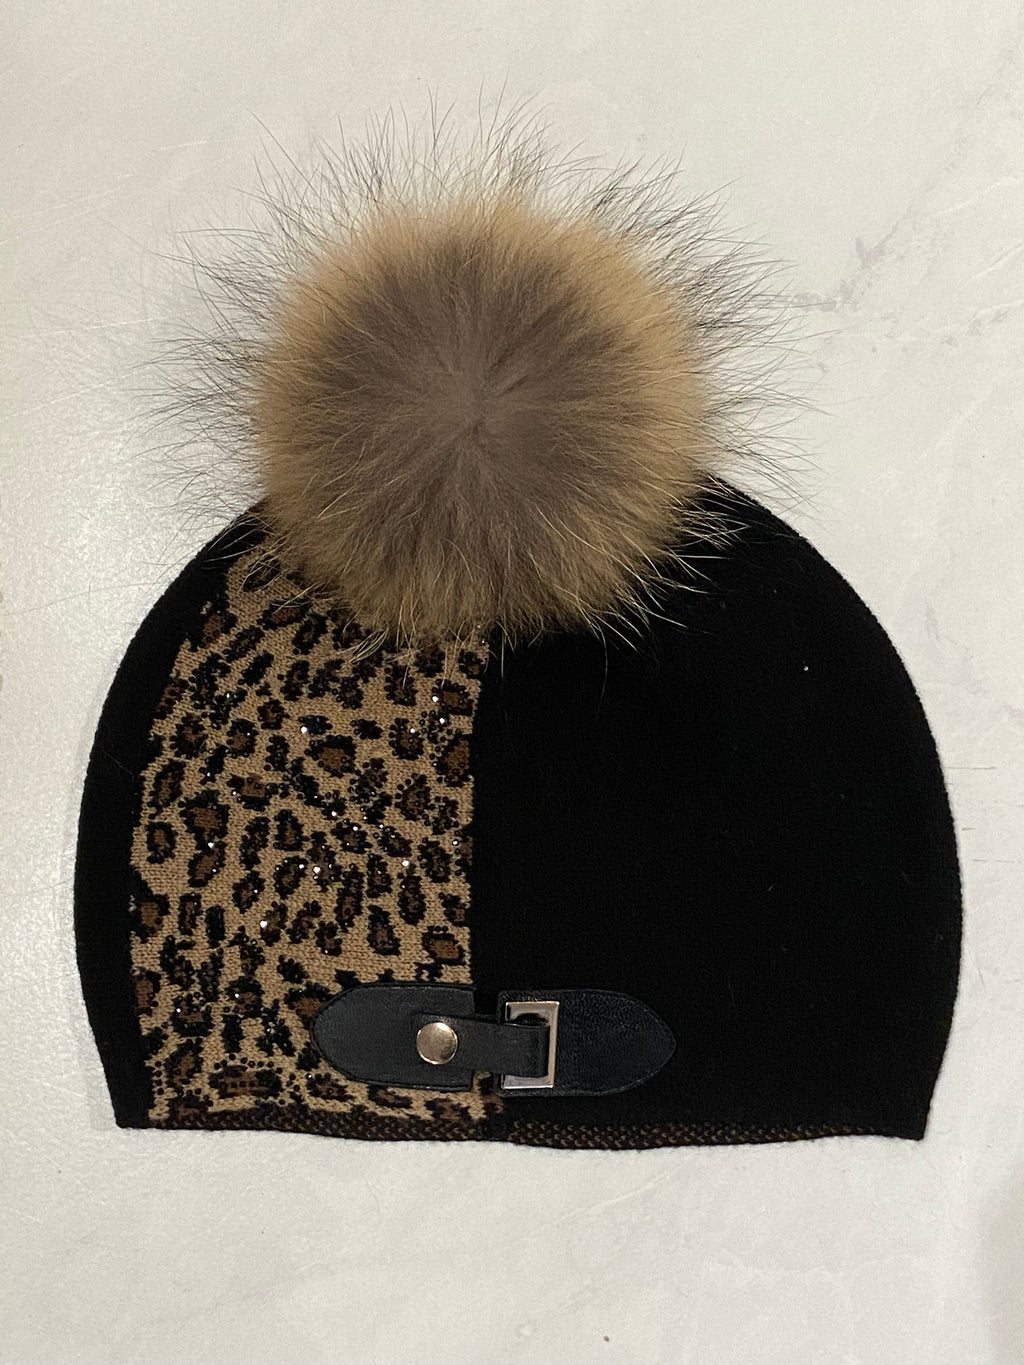 Mitchie's Animal Print Knitted Hat with Raccoon Fur Pom Pom